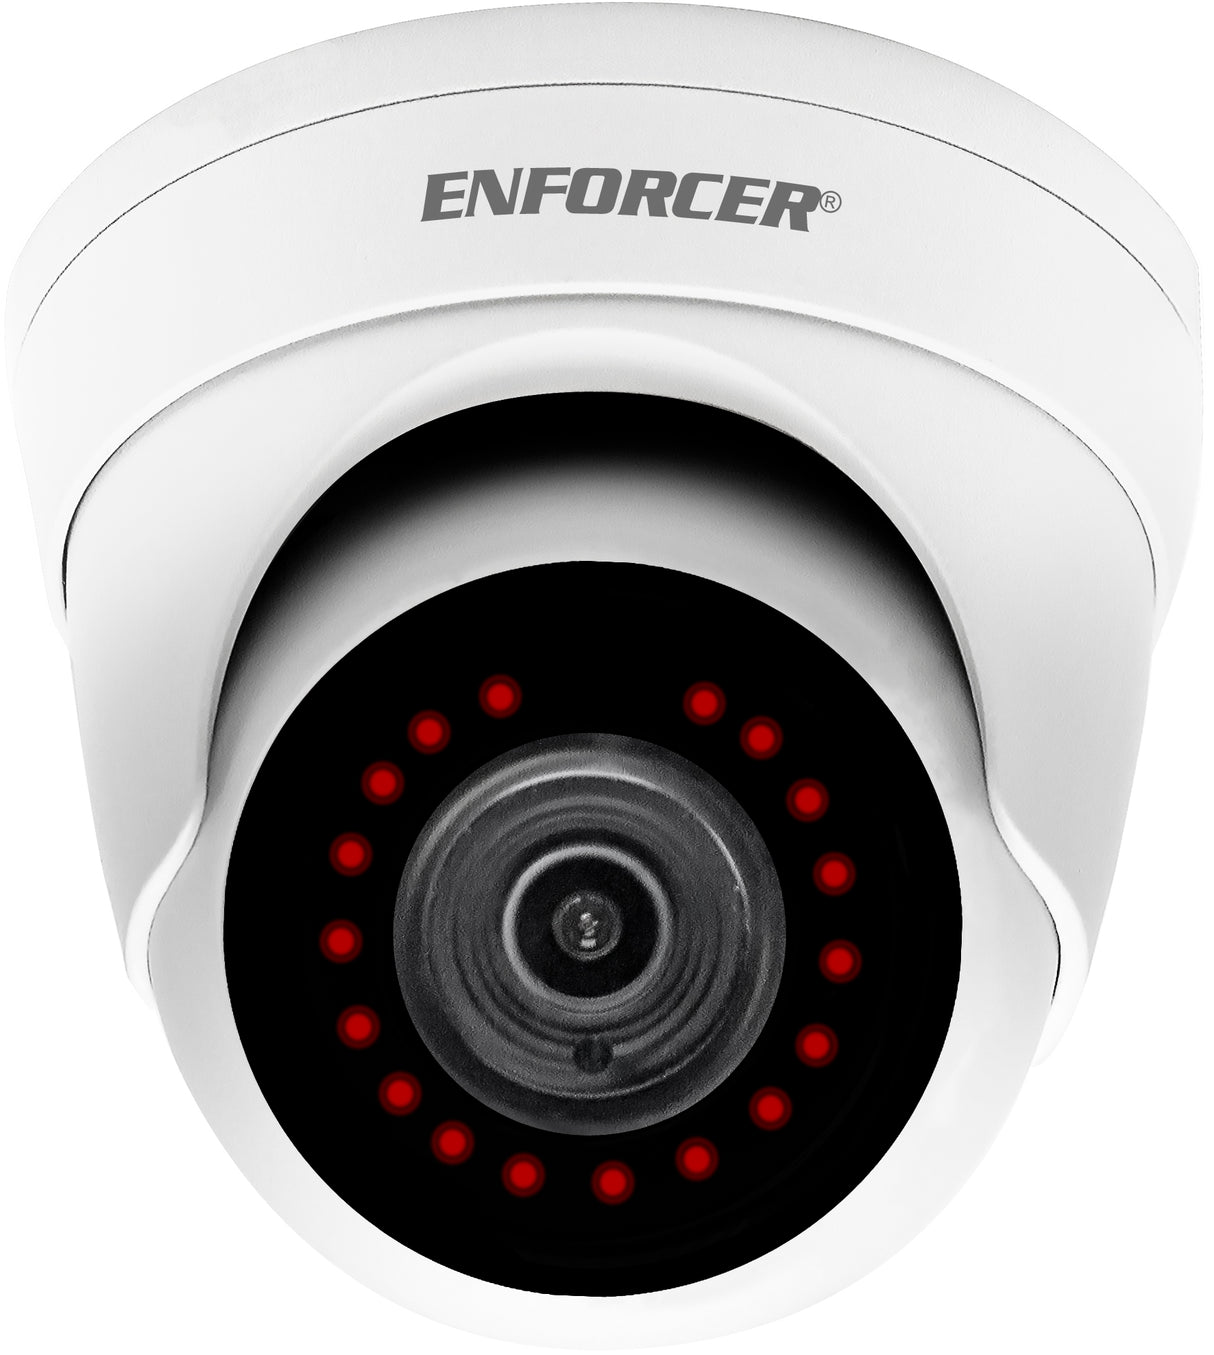 Seco-Larm EV-Y2501-A2WQ CCTV Camera